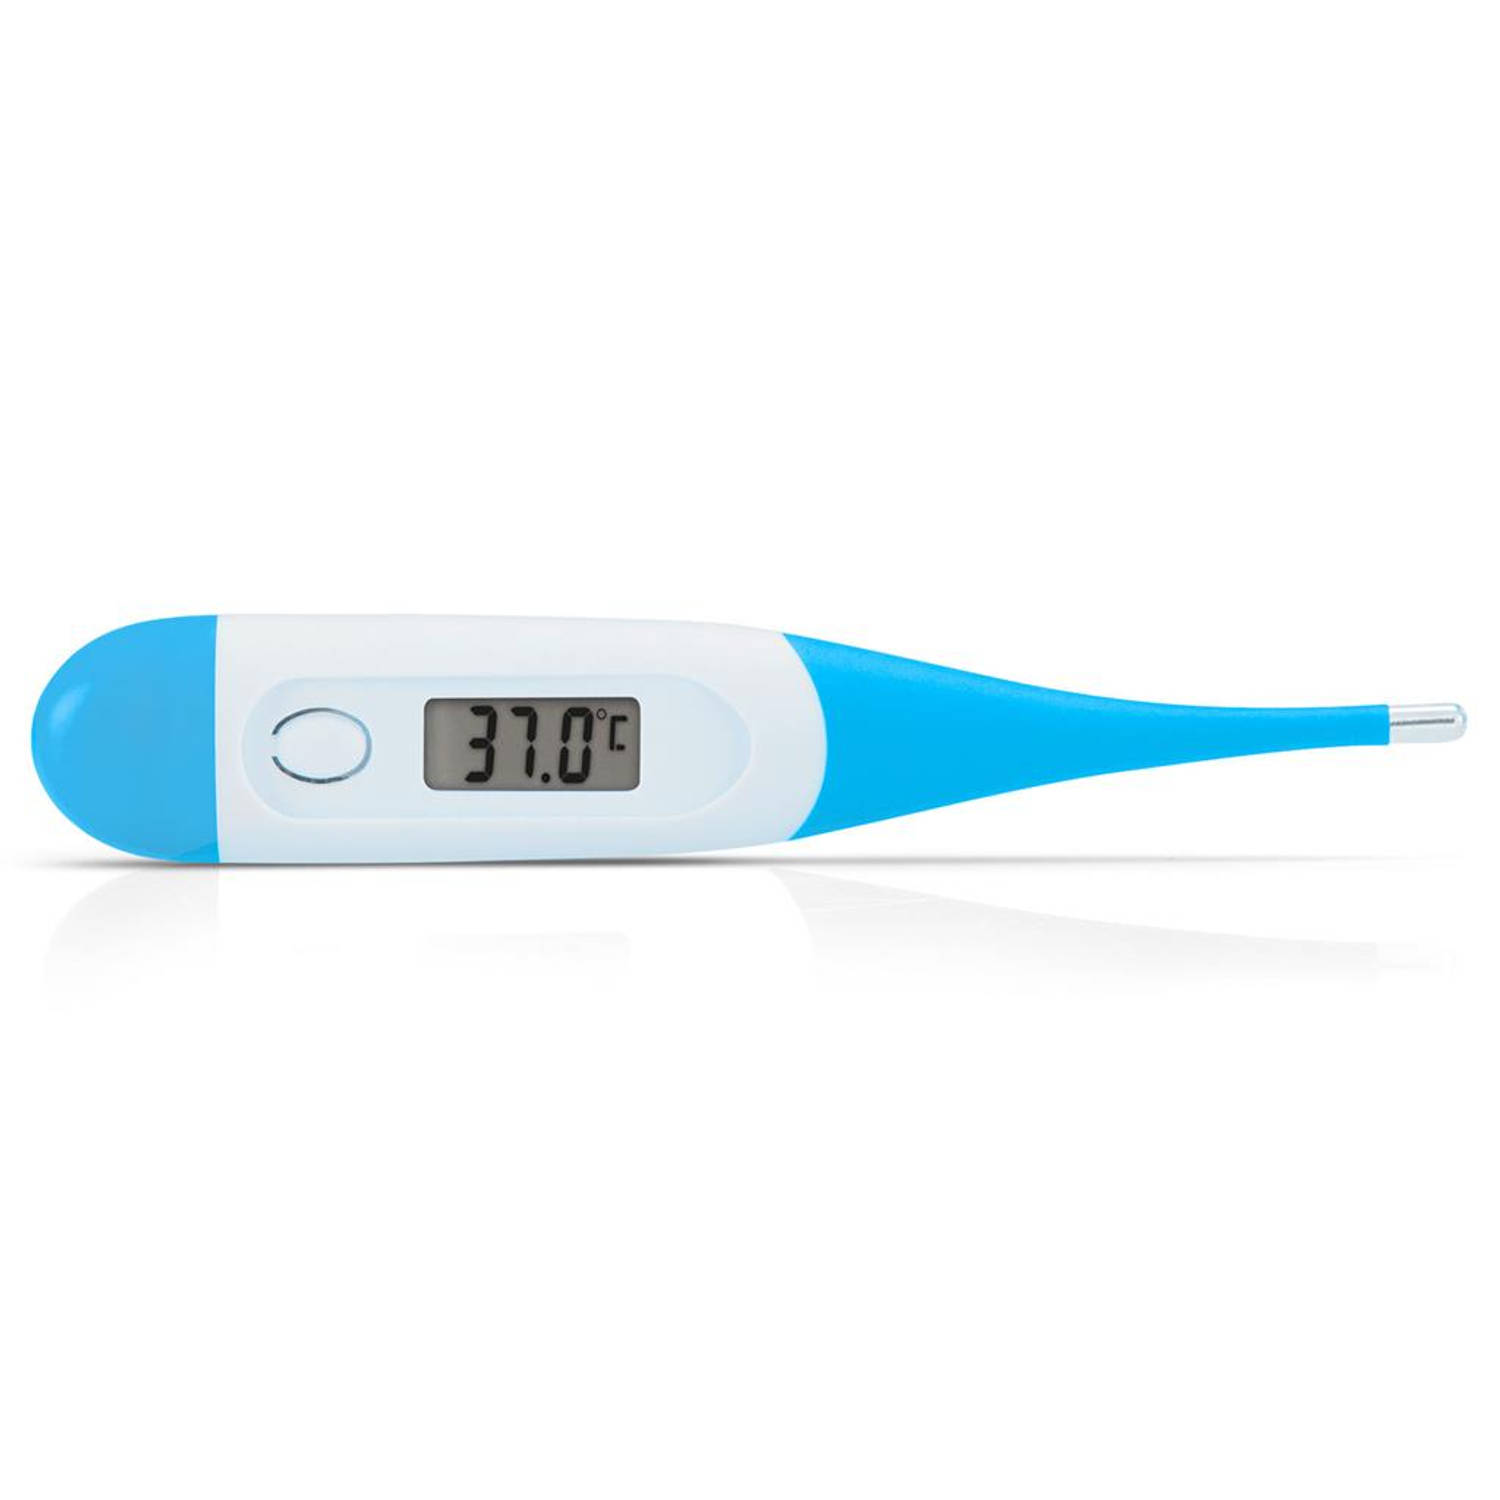 Maand Nebu cel Alecto digitale thermometer - blauw | Blokker